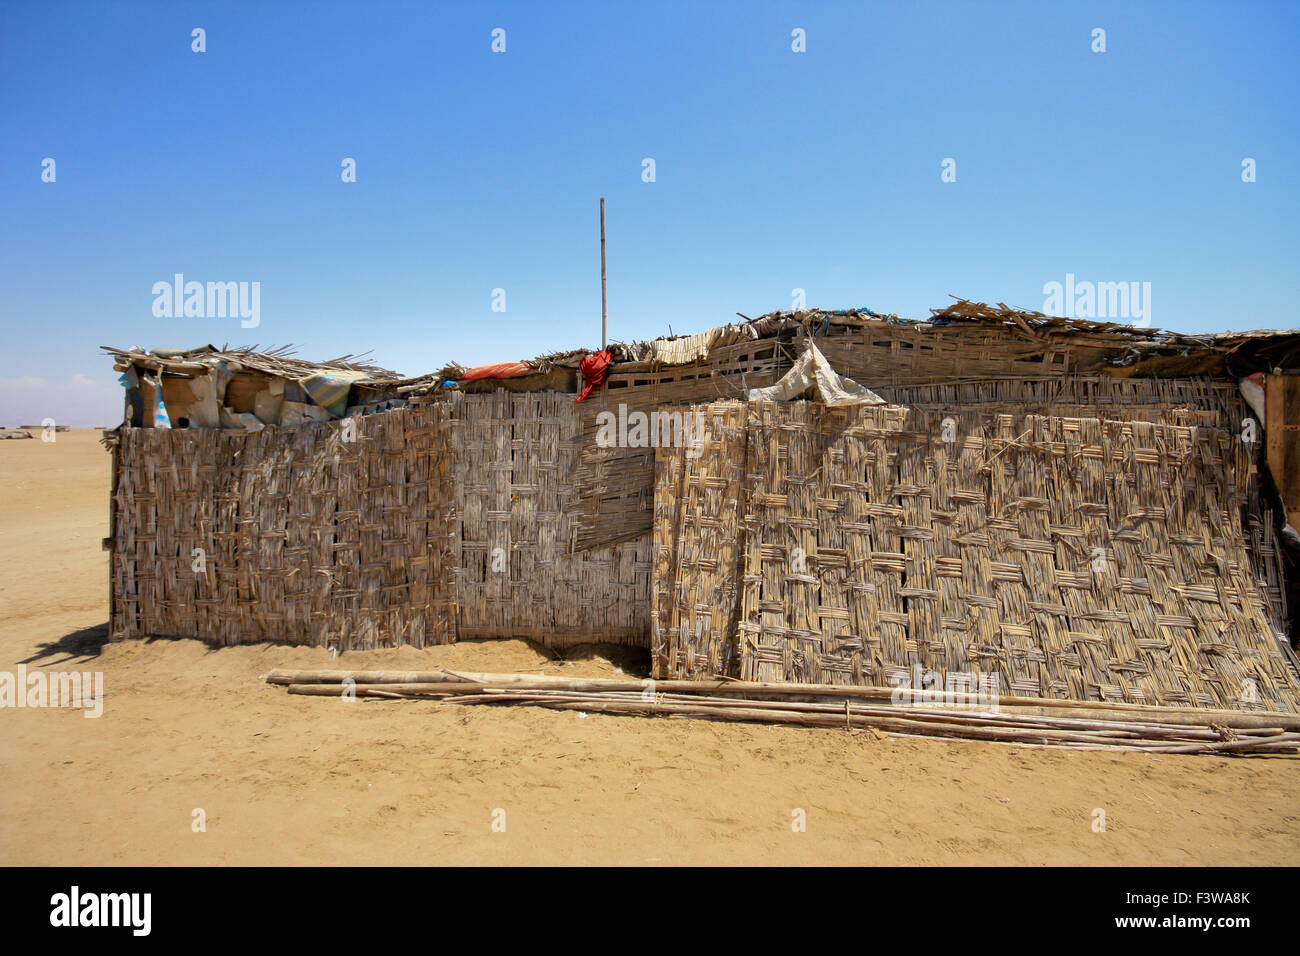 Village in desert Stock Photo